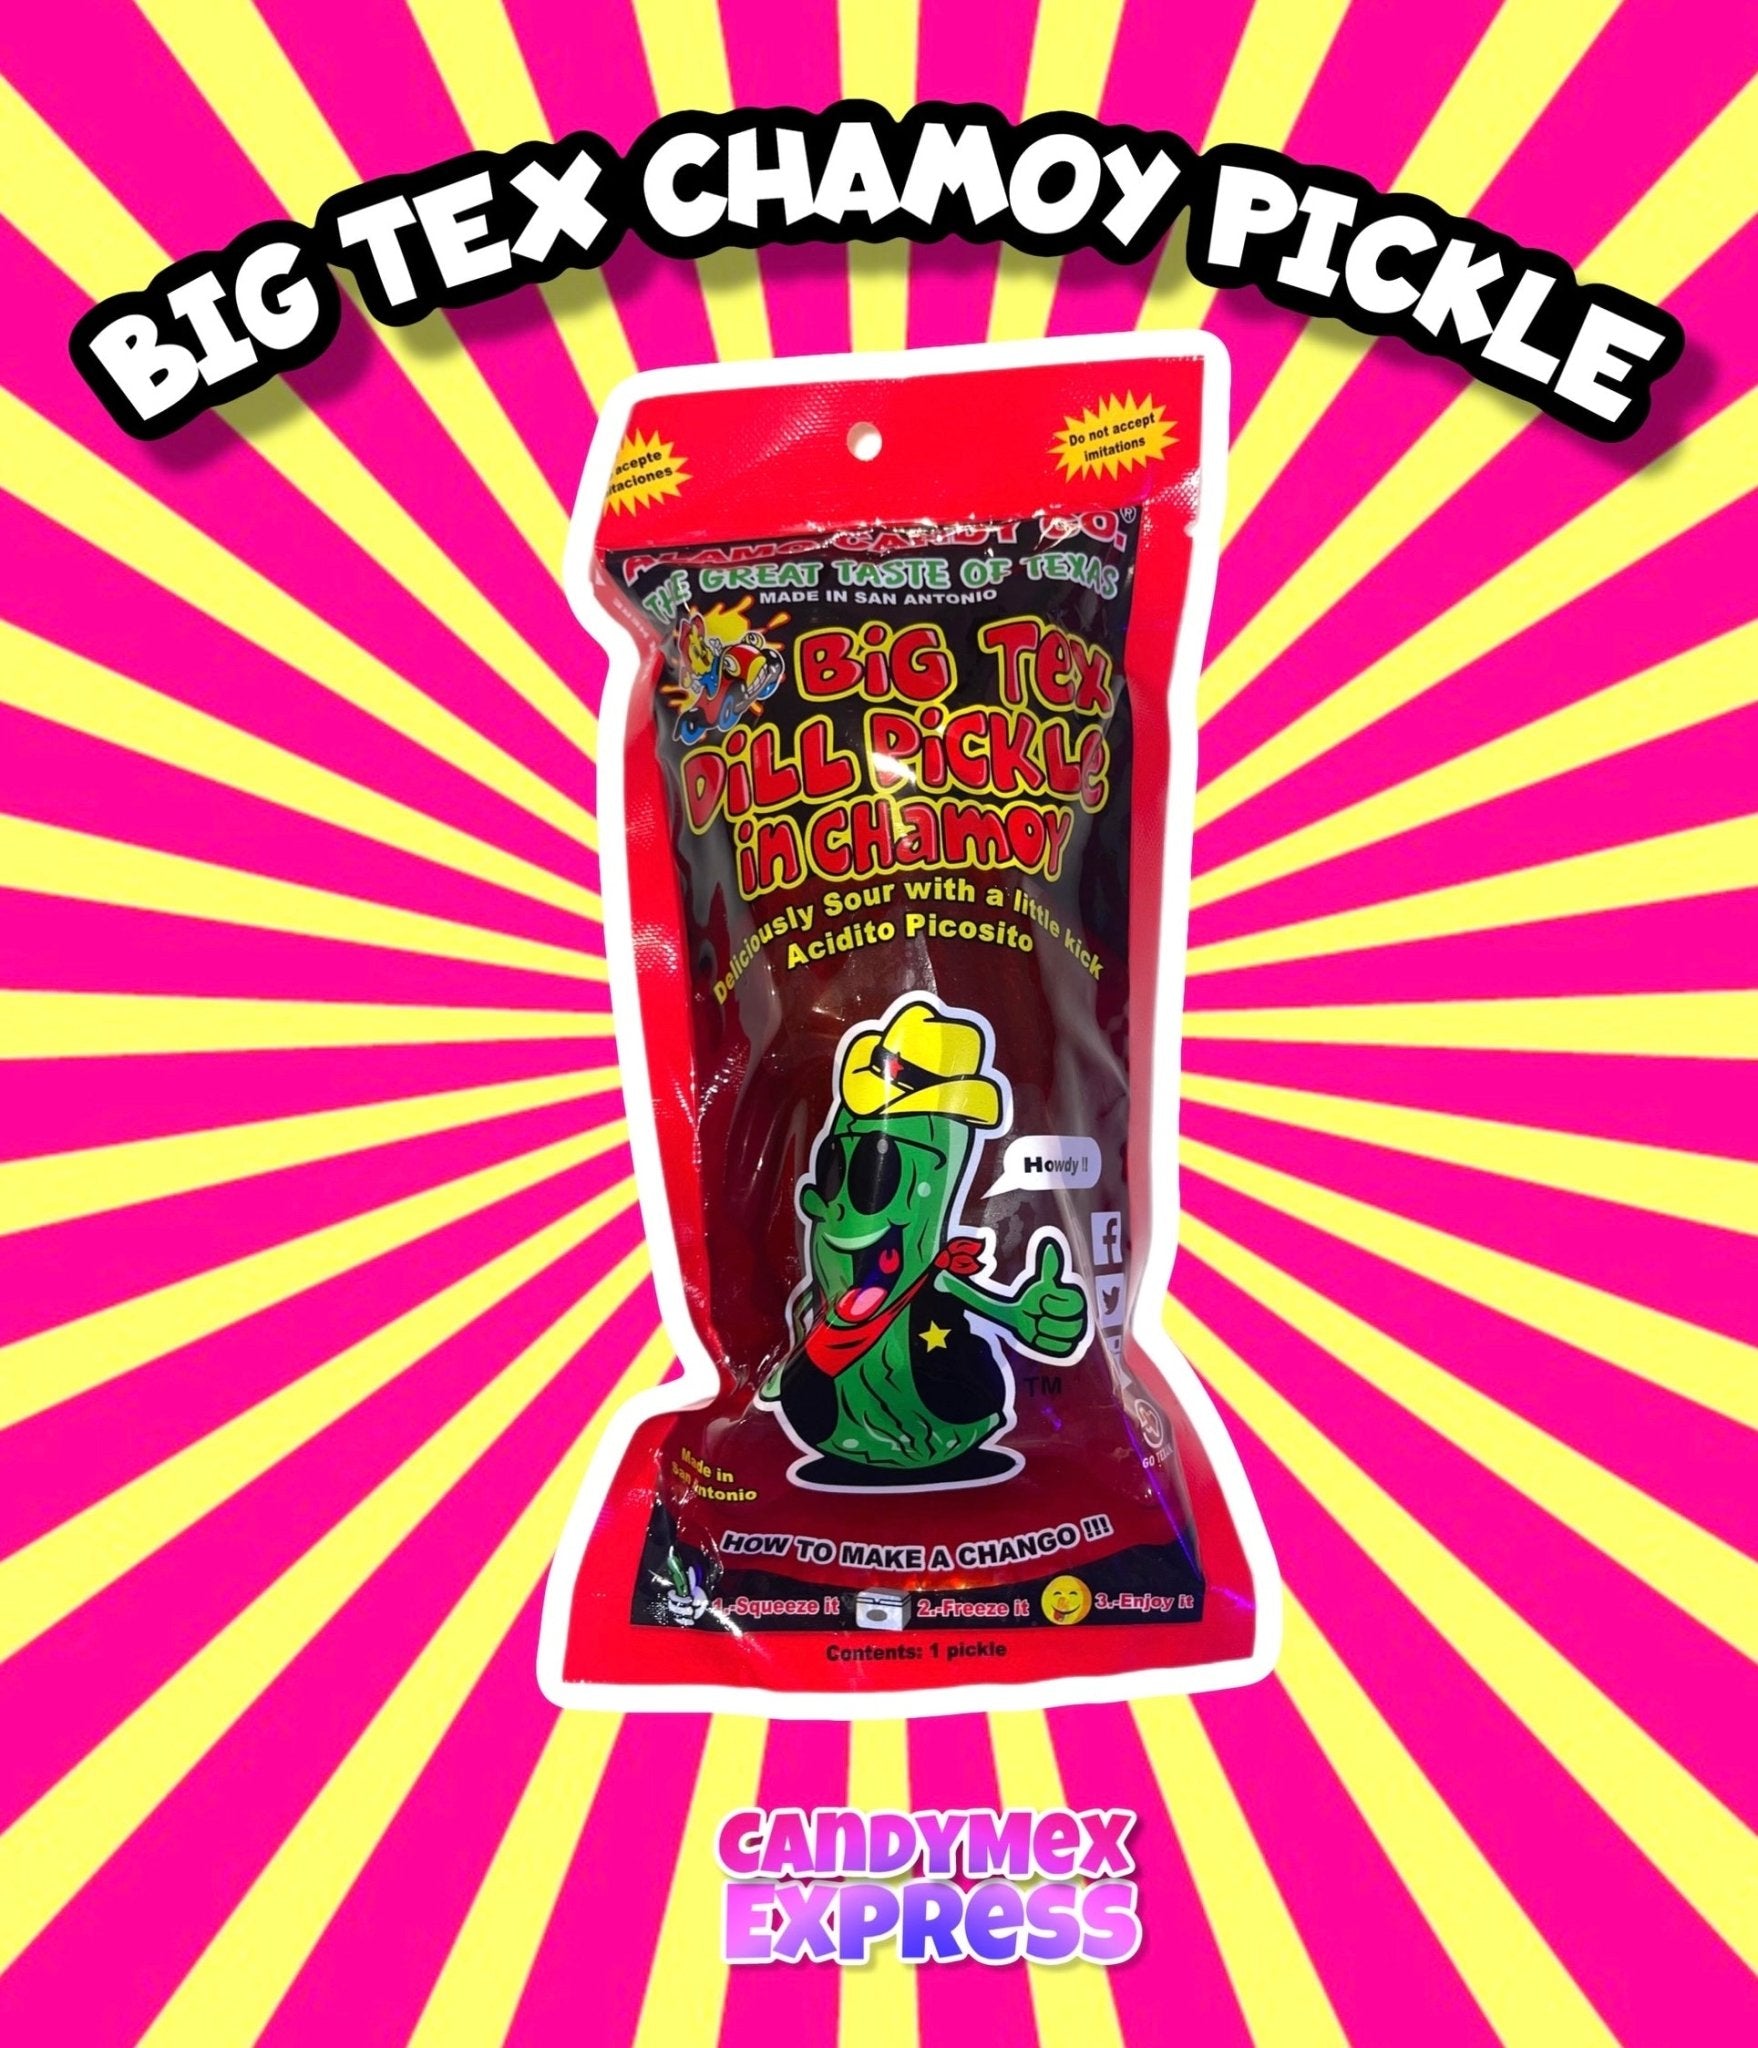 Chamoy Pickle Kit